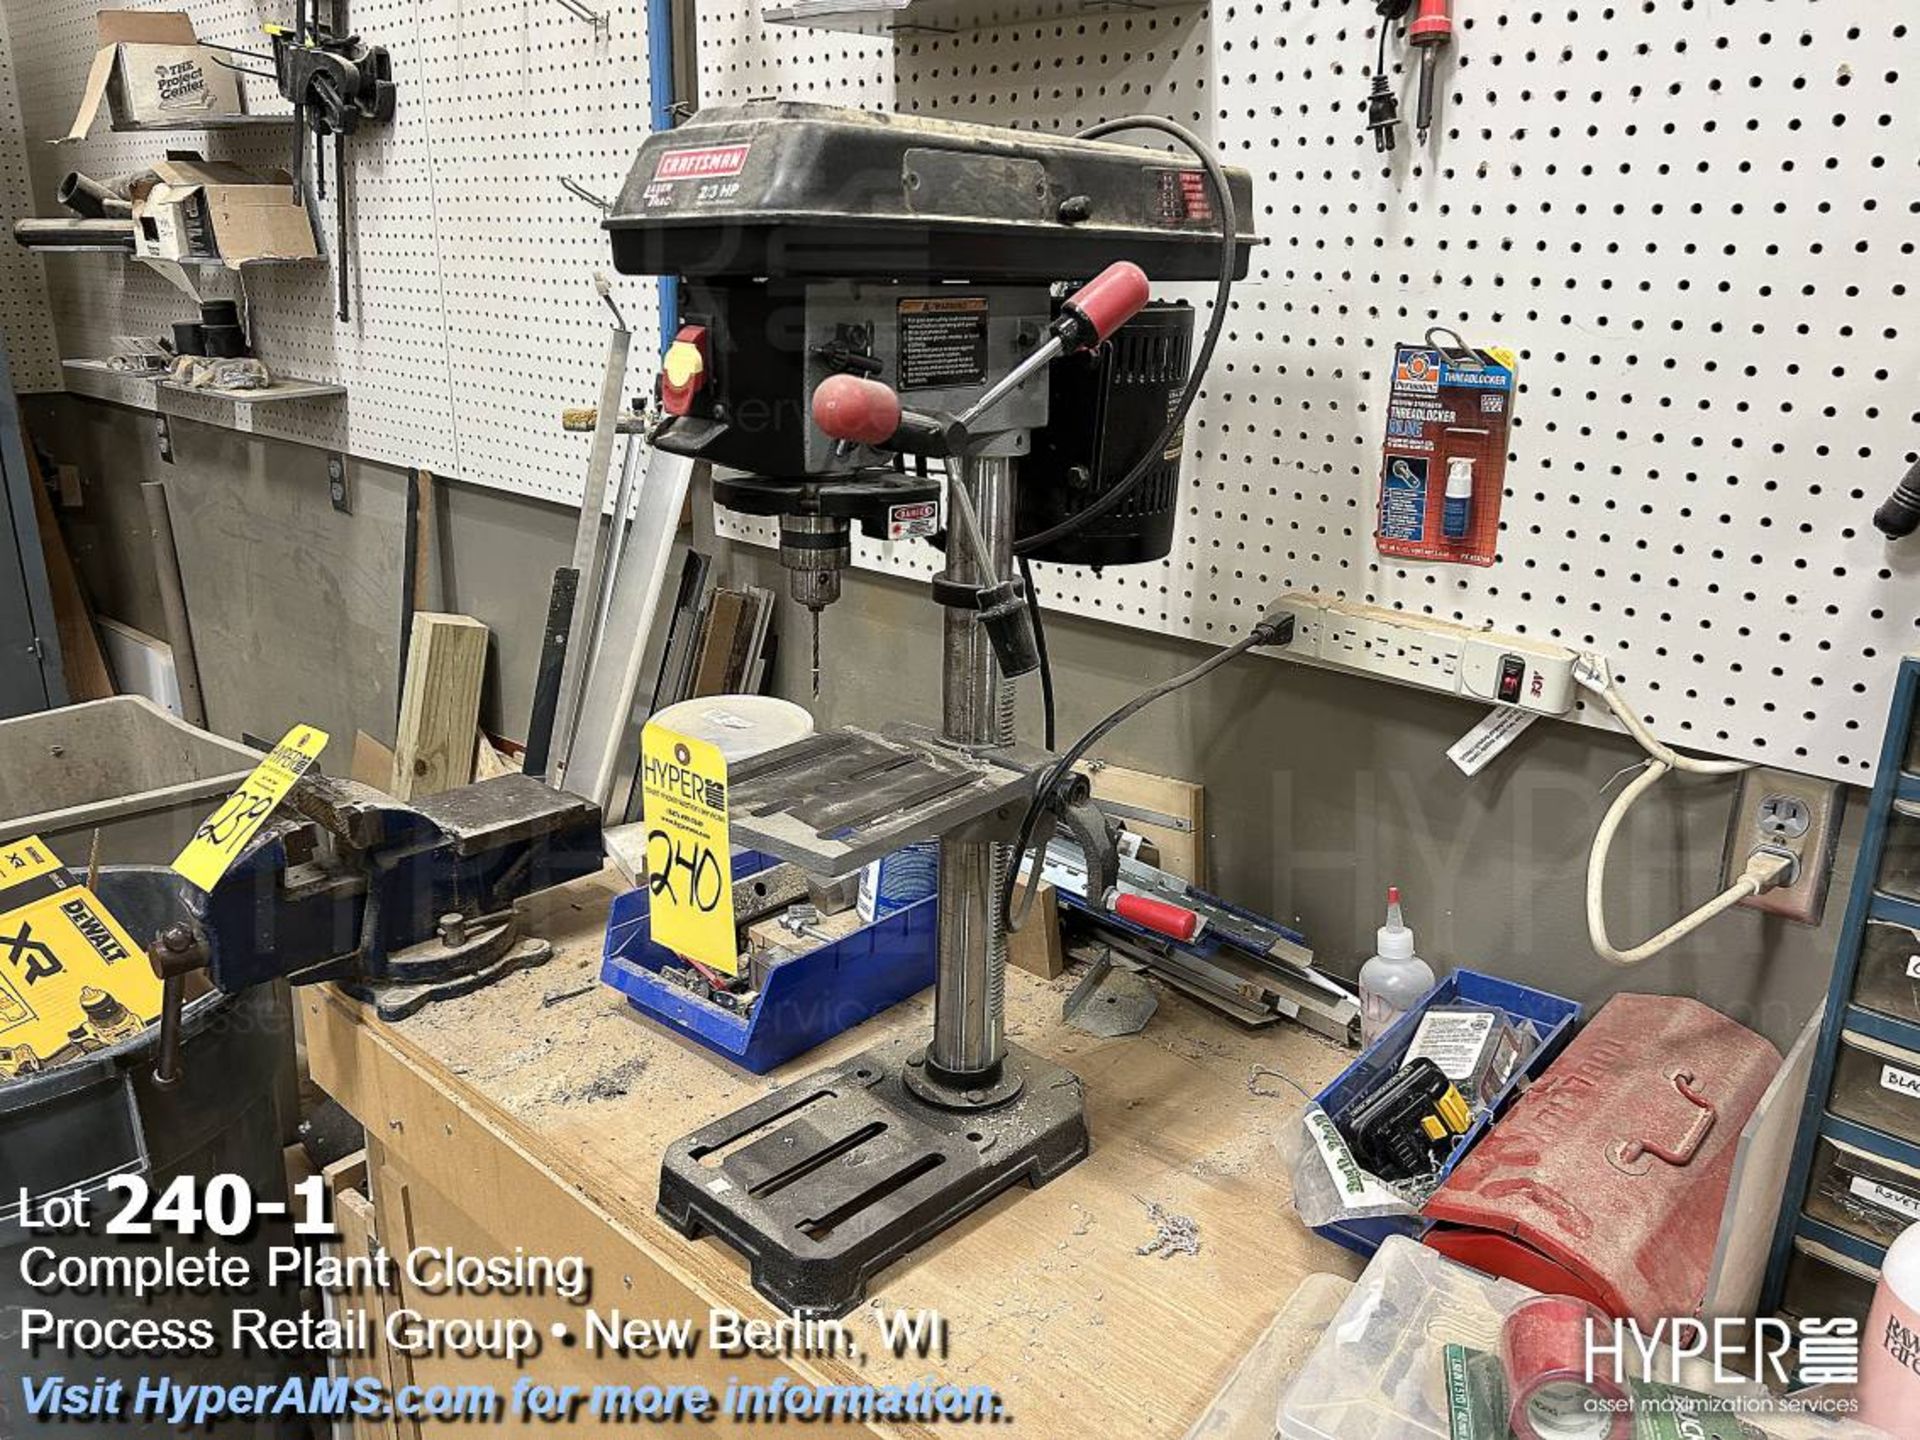 Craftsman 2/3hp bench top drill press